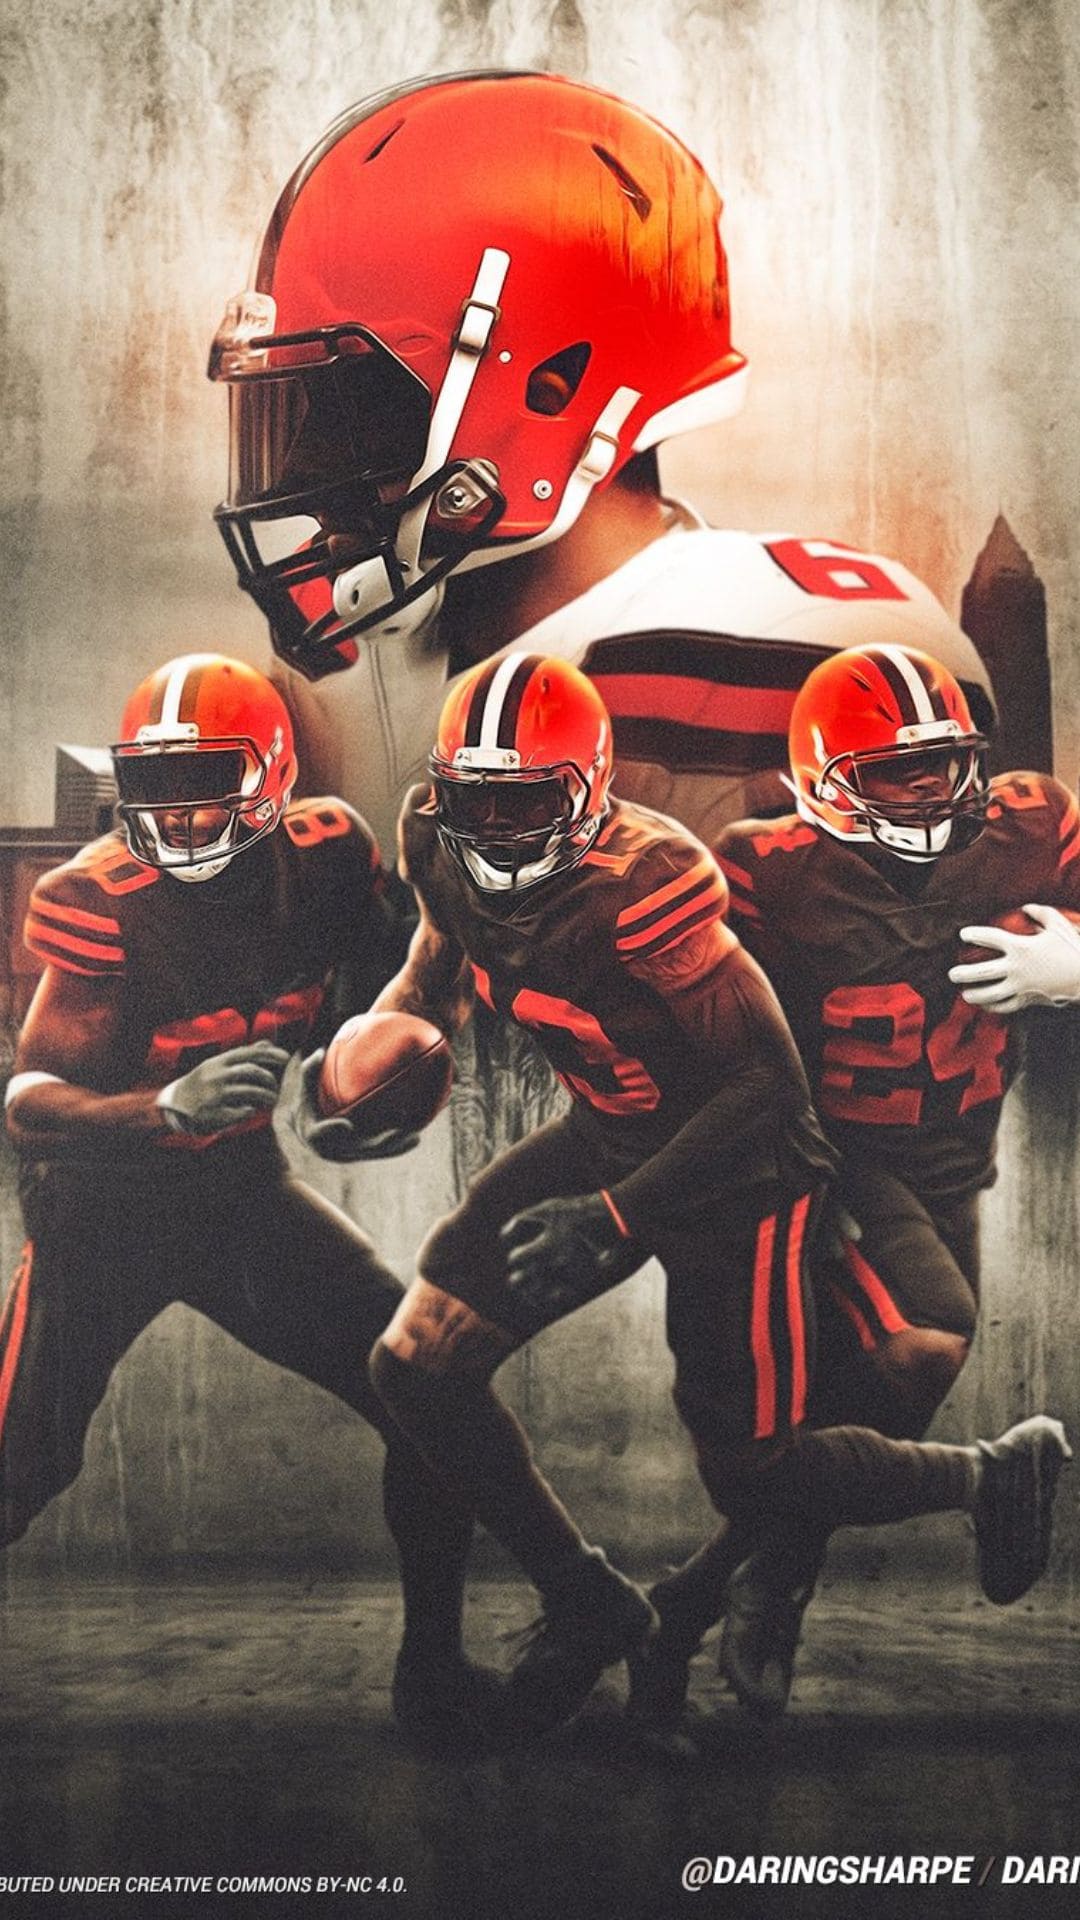 Cleveland Browns Wallpaper Best Cleveland Browns Background Download